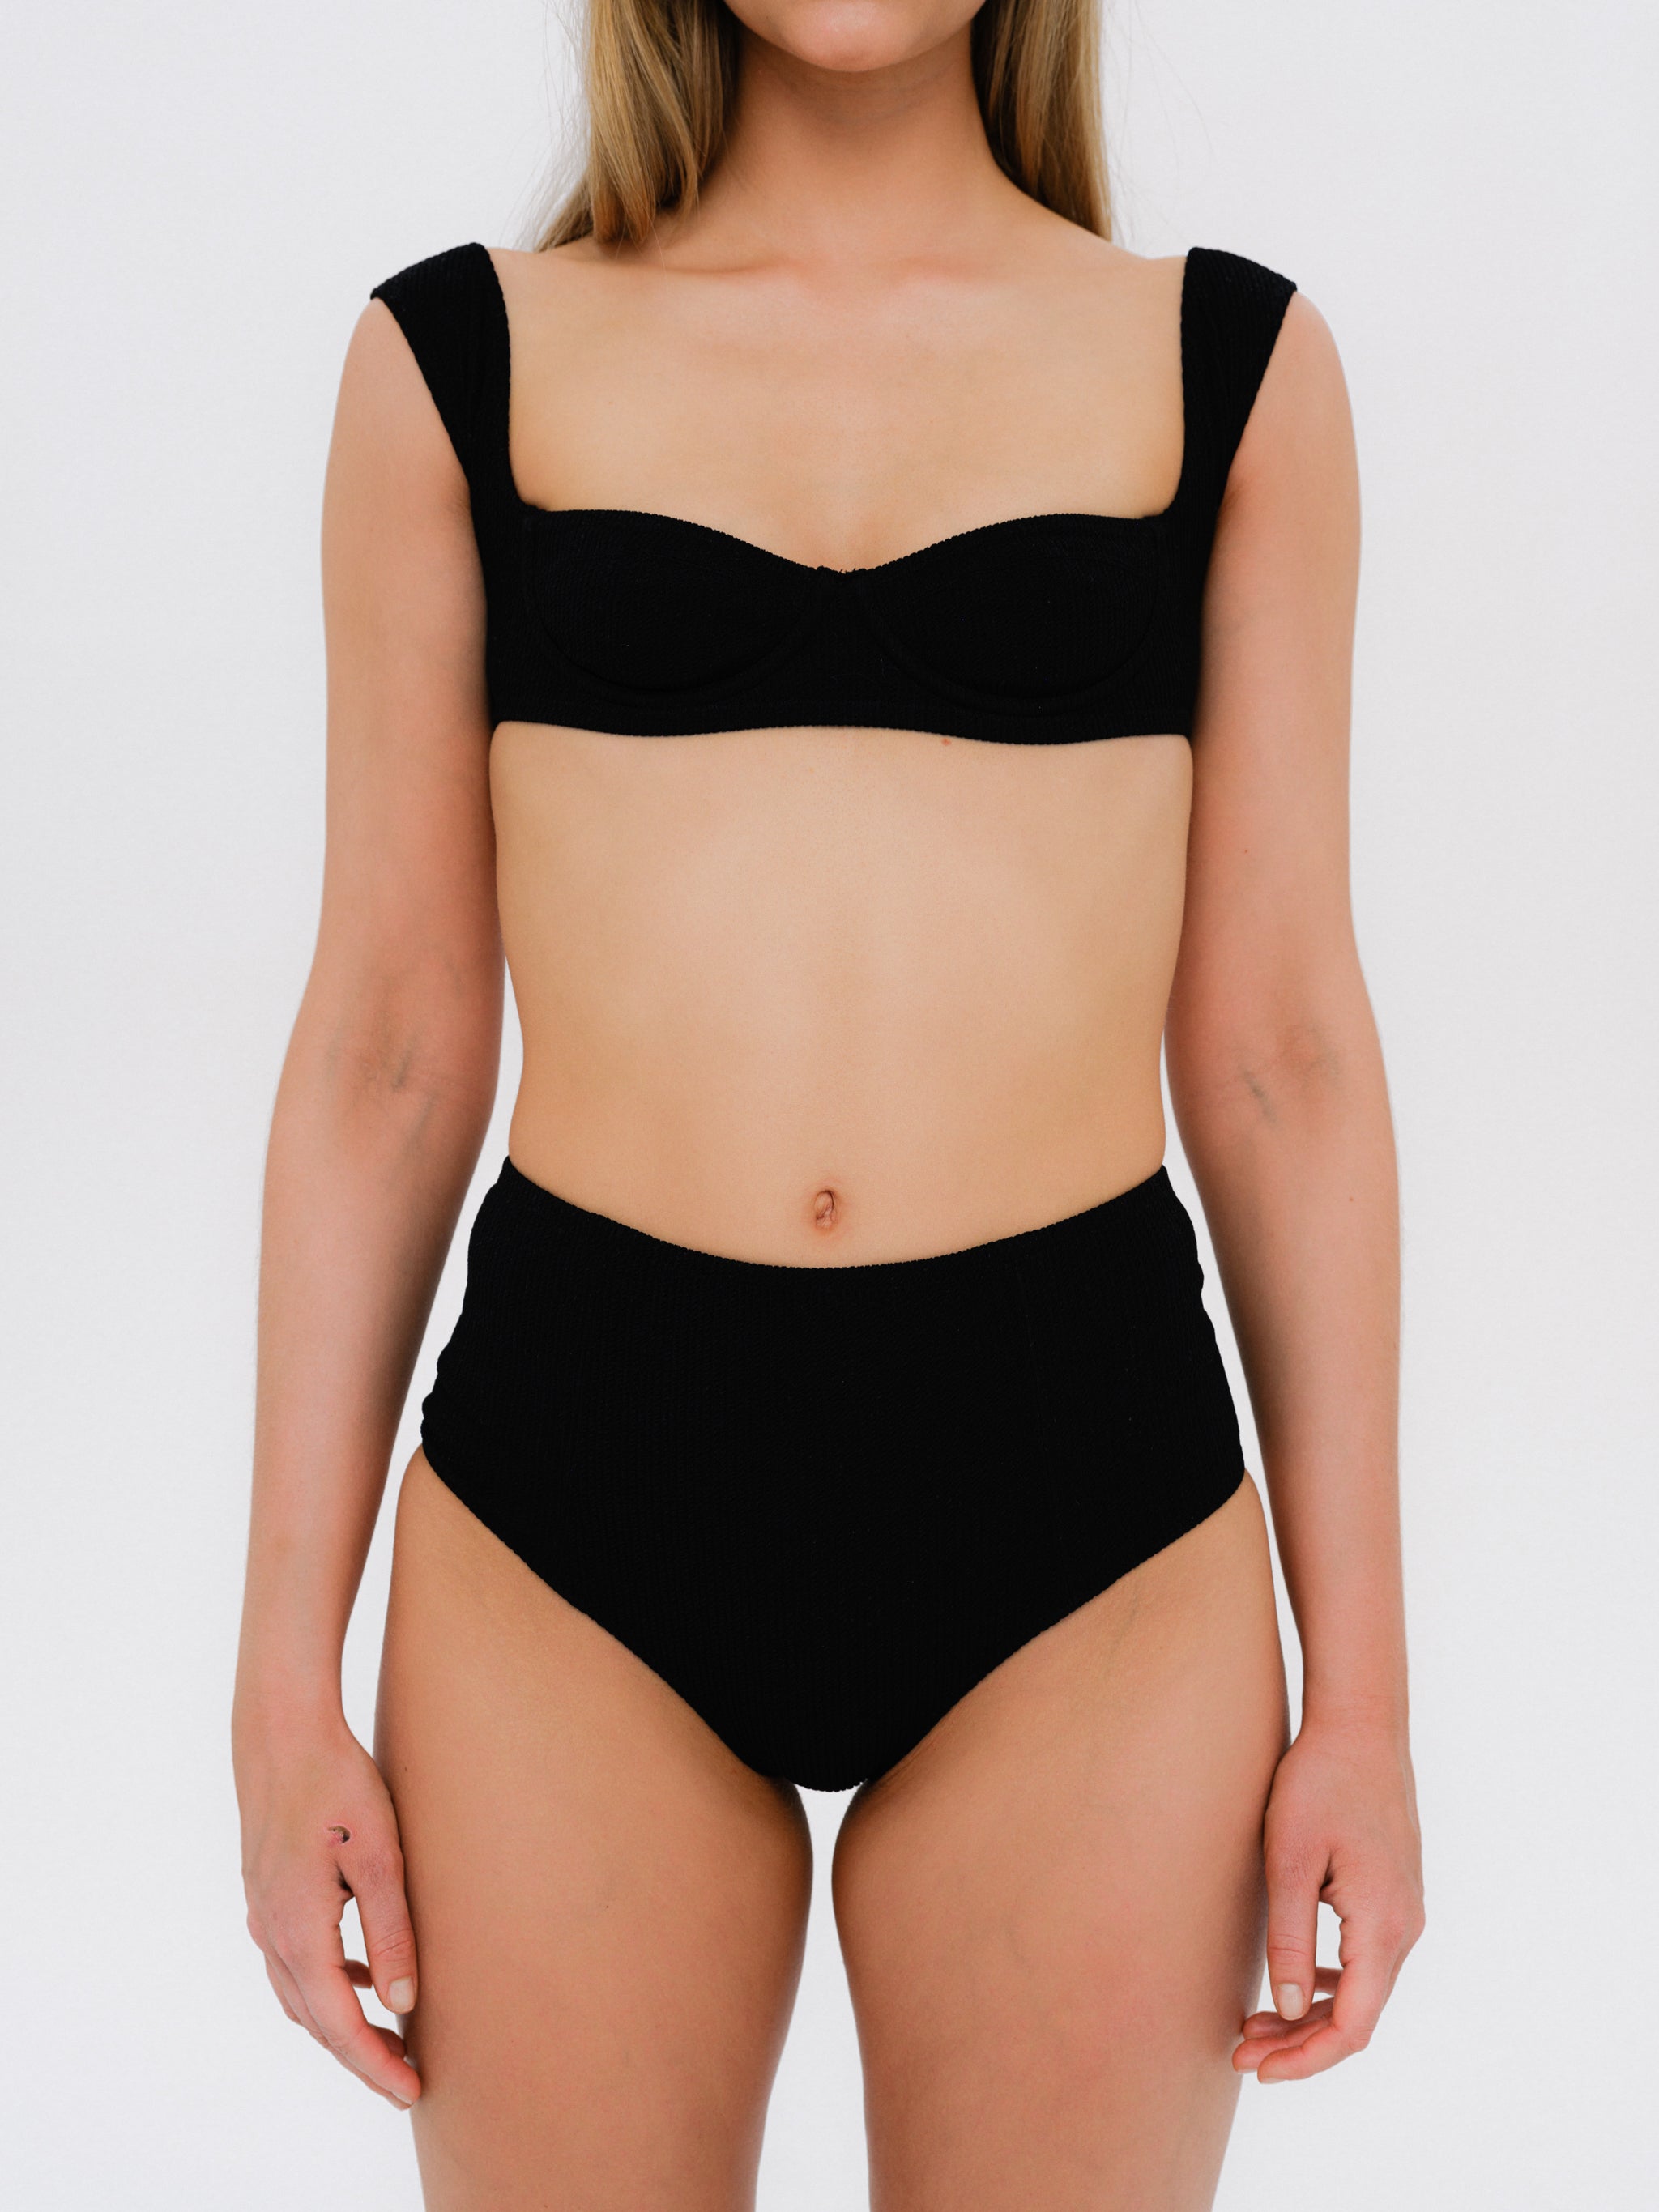 South Pacific Bikini Top | Black Texture